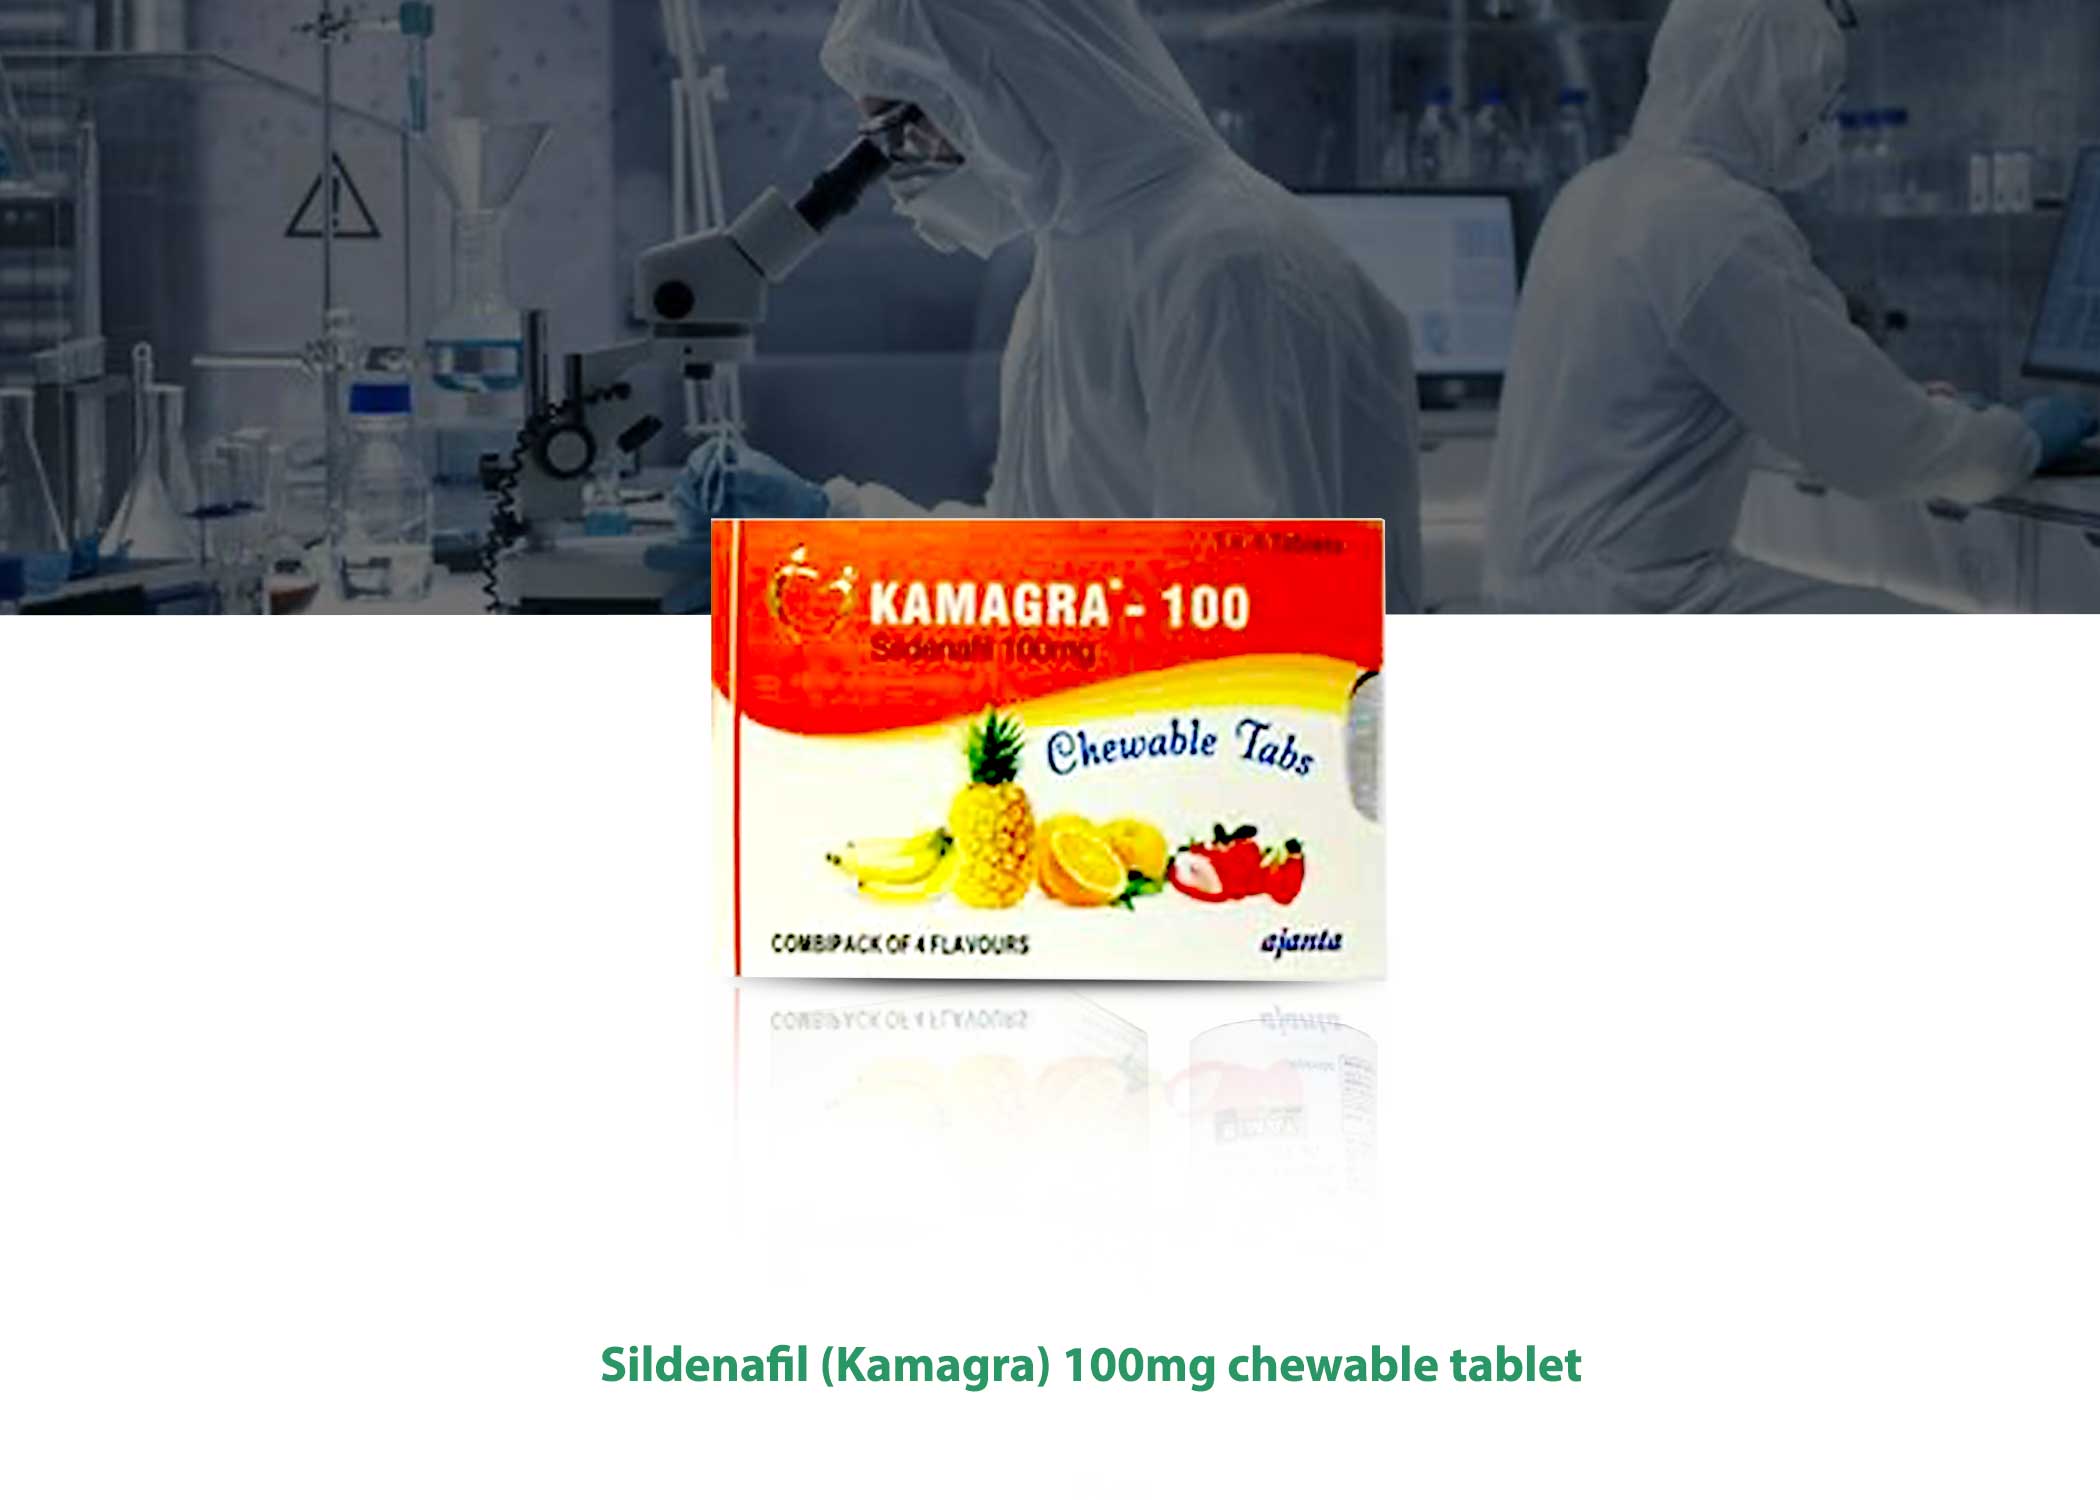 Sildenafil Kamagra 100mg chewable tablet